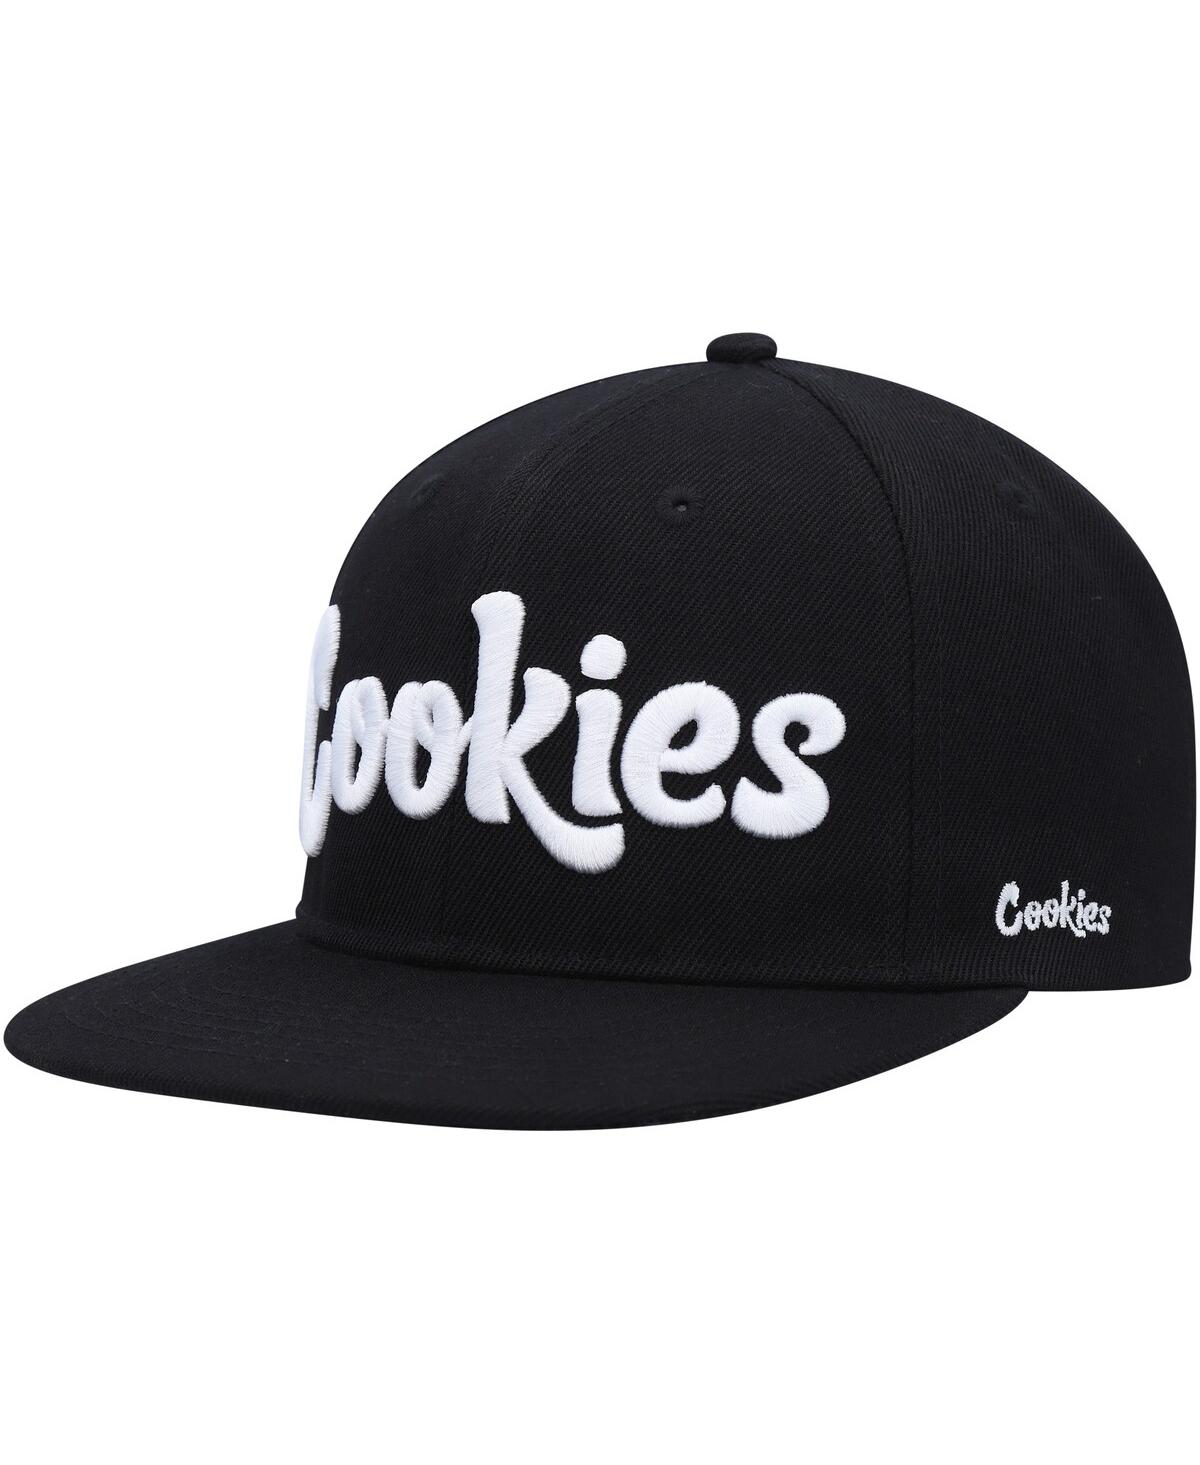 Cookies Men's  Black Original Mint Snapback Hat